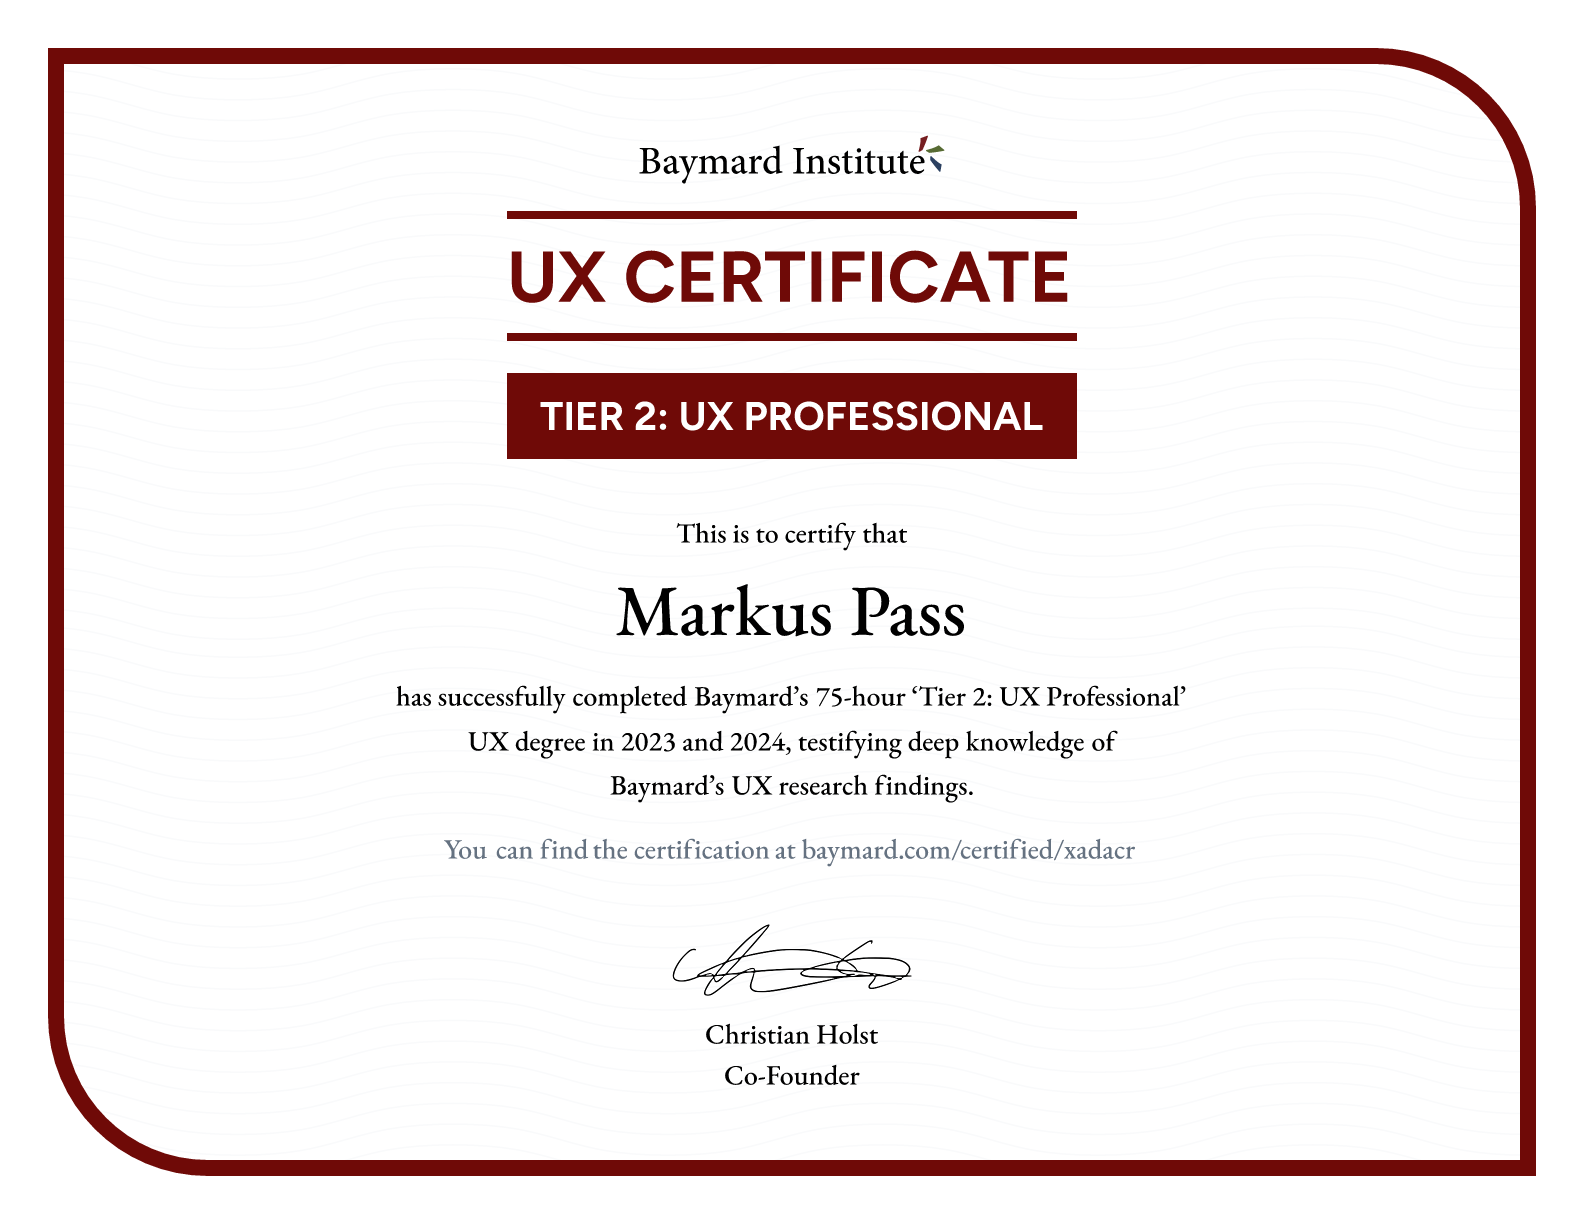 Markus Pass’s certificate